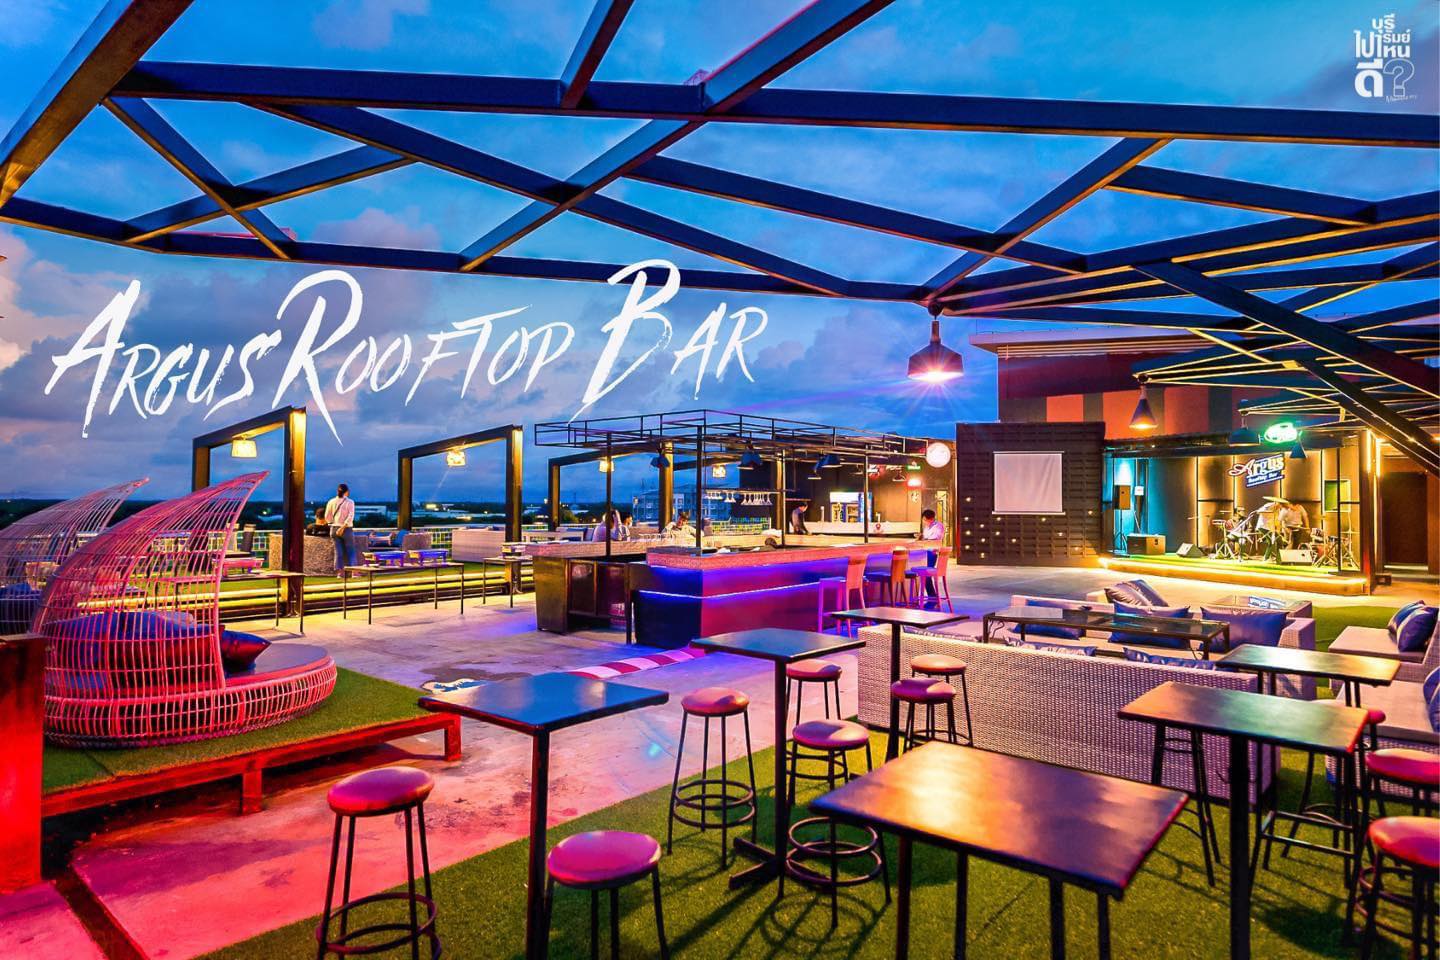 Argus Rooftop Bar (Argus Rooftop Bar) : บุรีรัมย์ (Buri Ram)